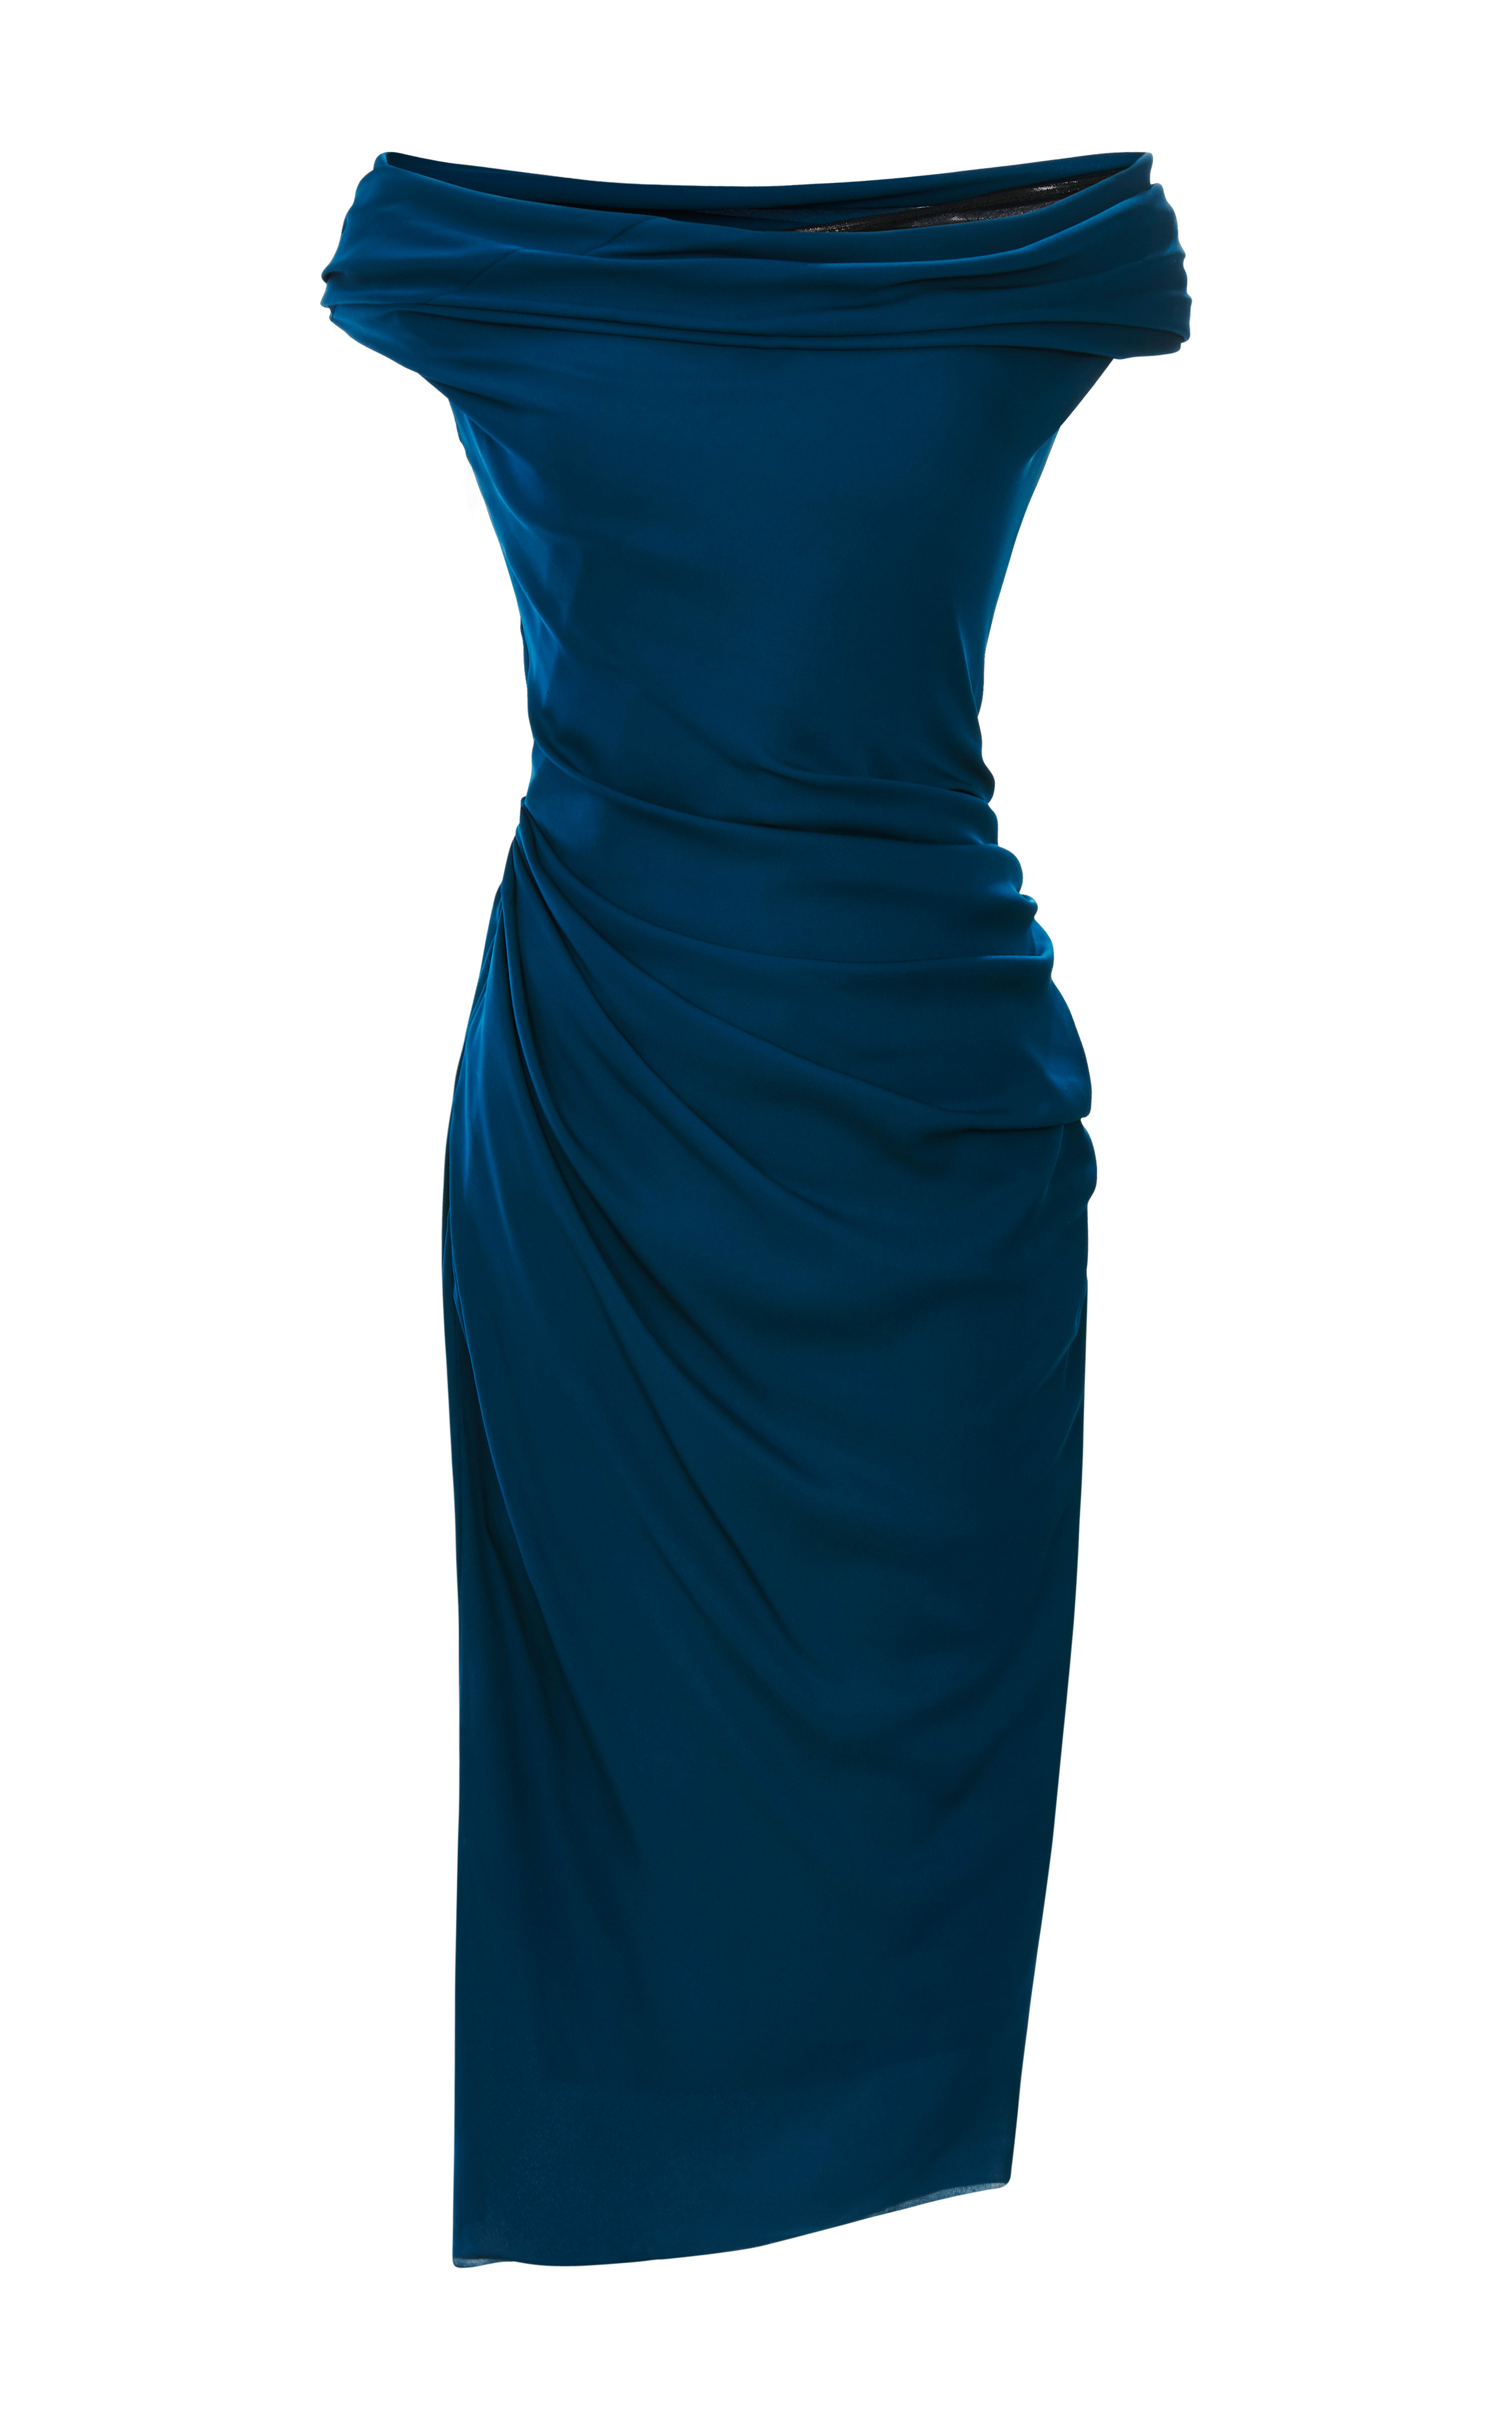 Cushnie et Ochs Silk Georgette Dress in Teal (Blue) - Lyst